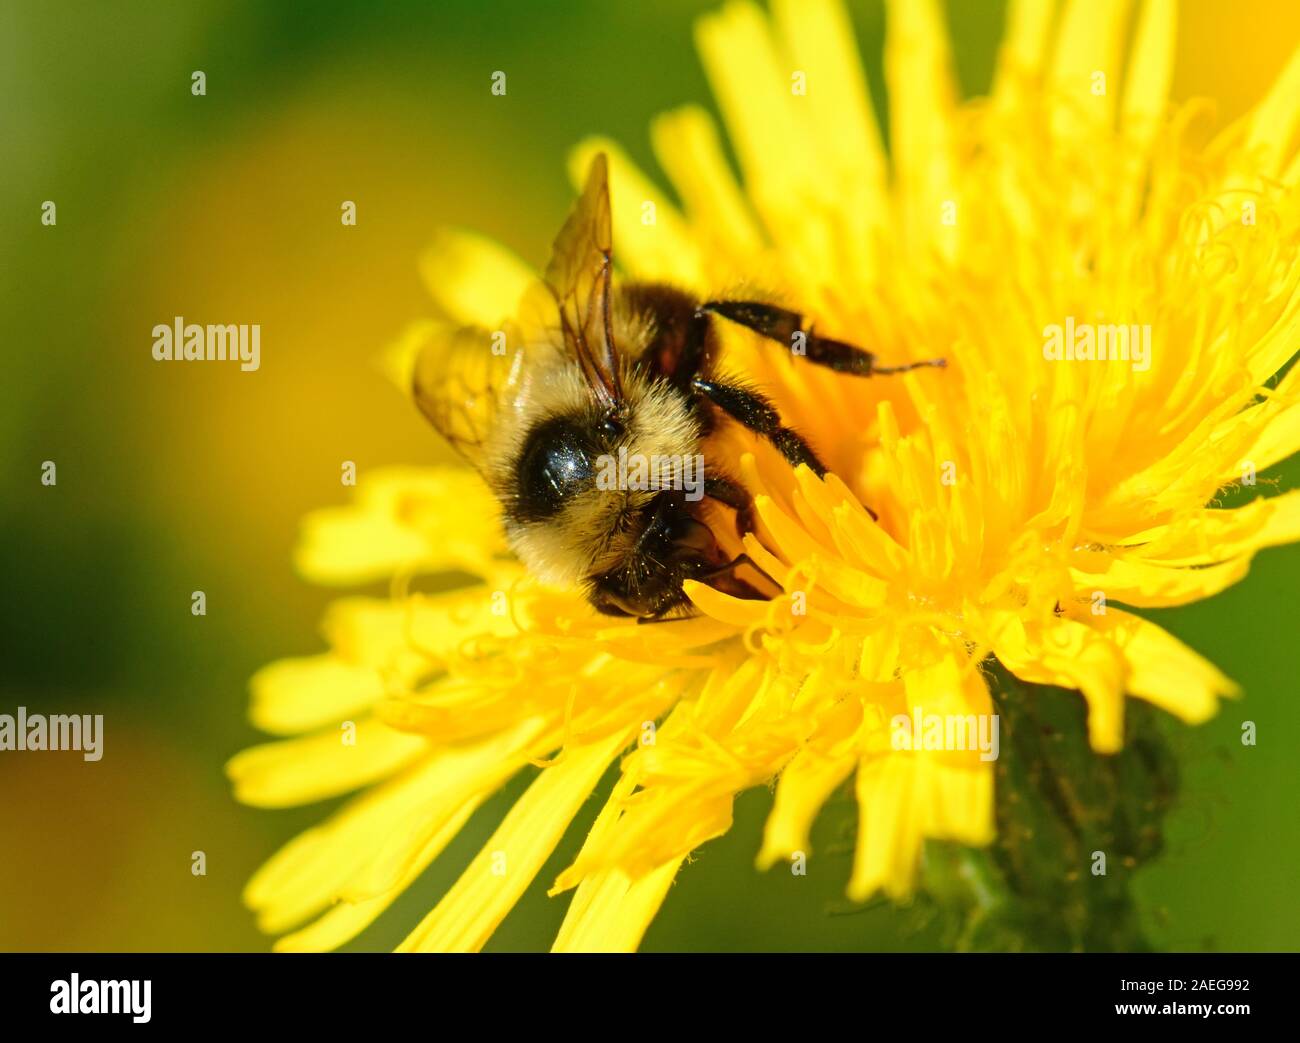 bumble bee on yellow flower Stock Photo